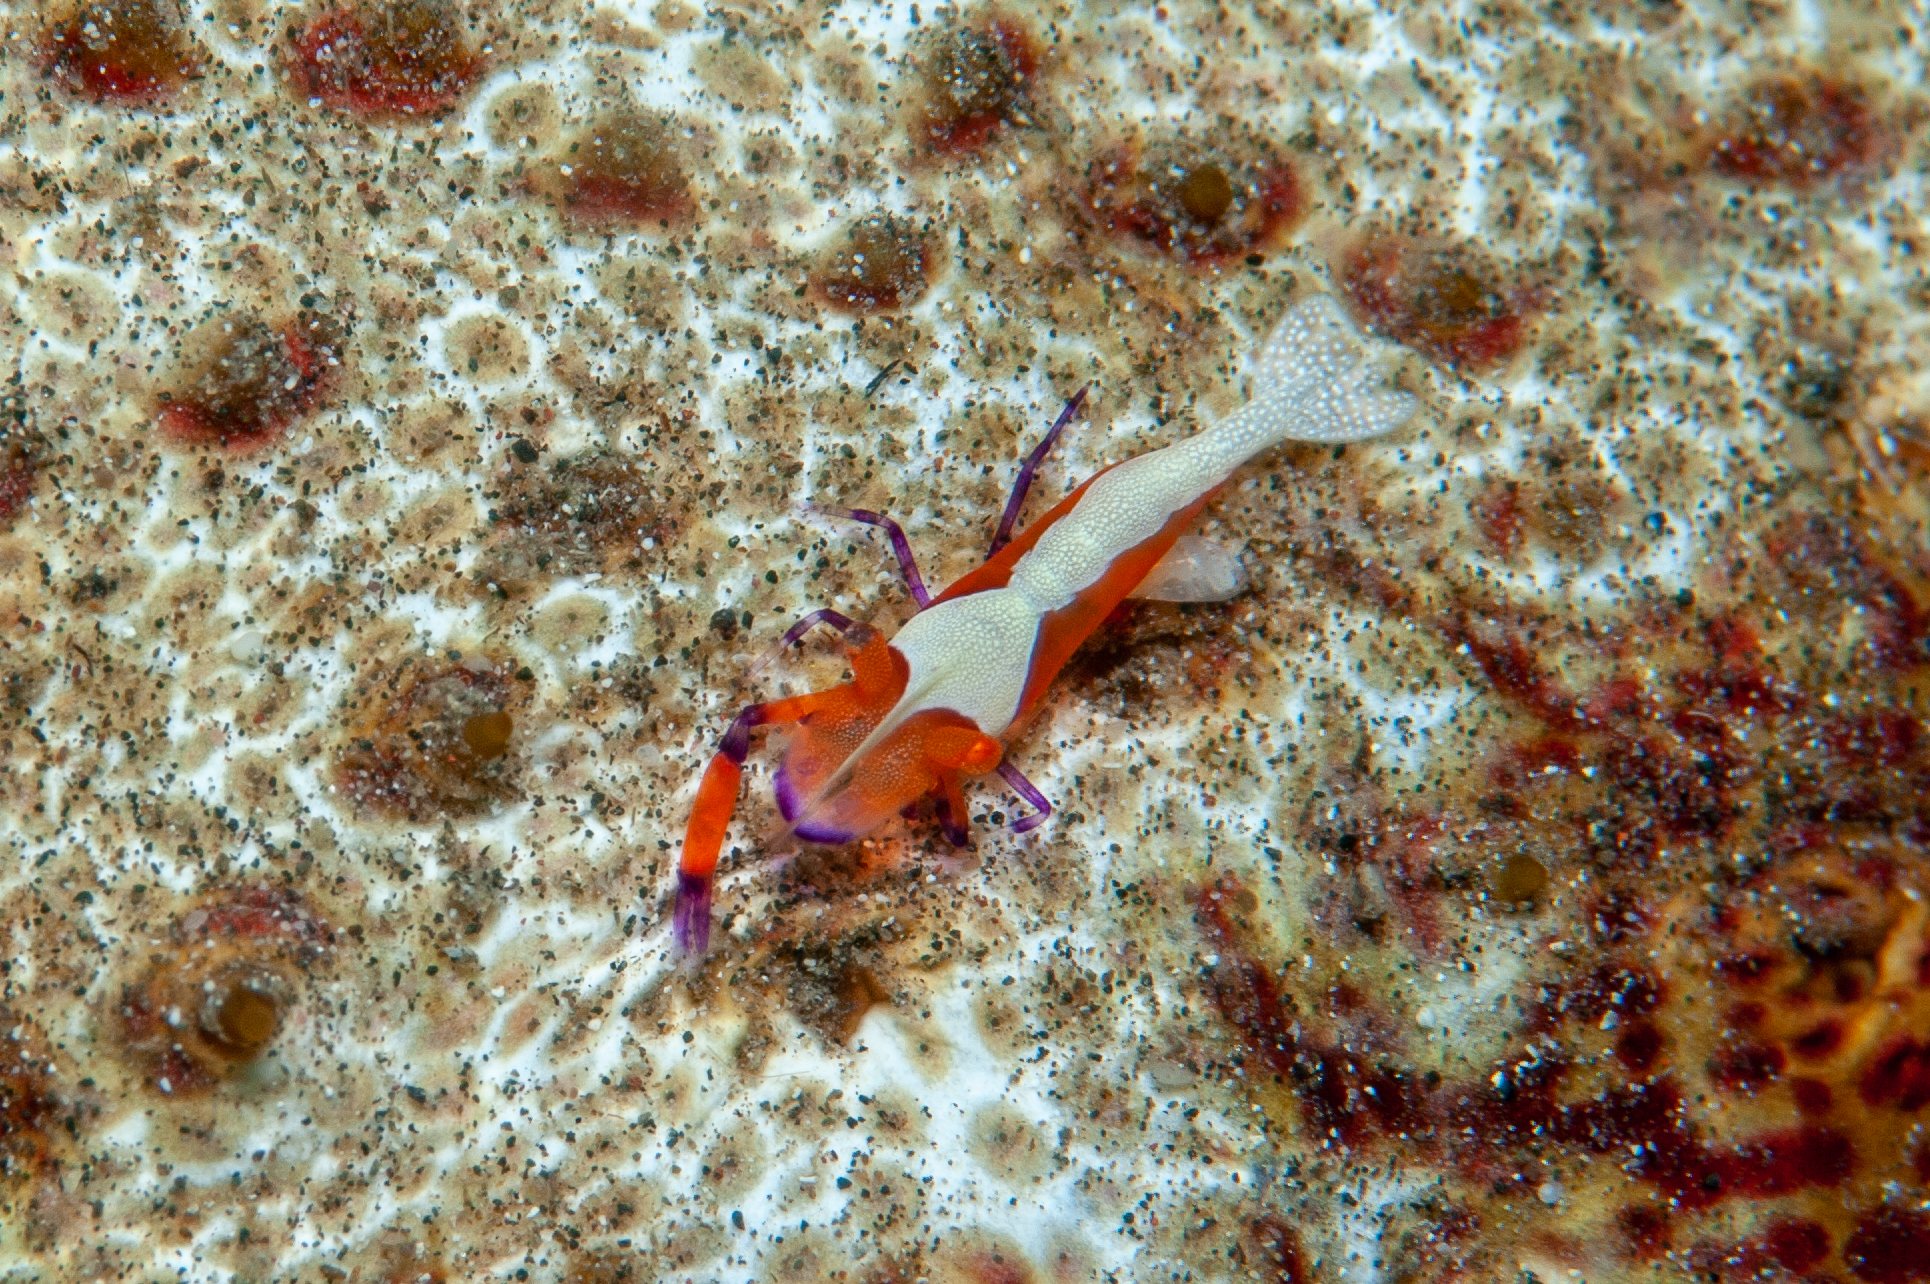 Periclimenes imperator shrimp on holothurian, Wirey Bay, Witu Islands